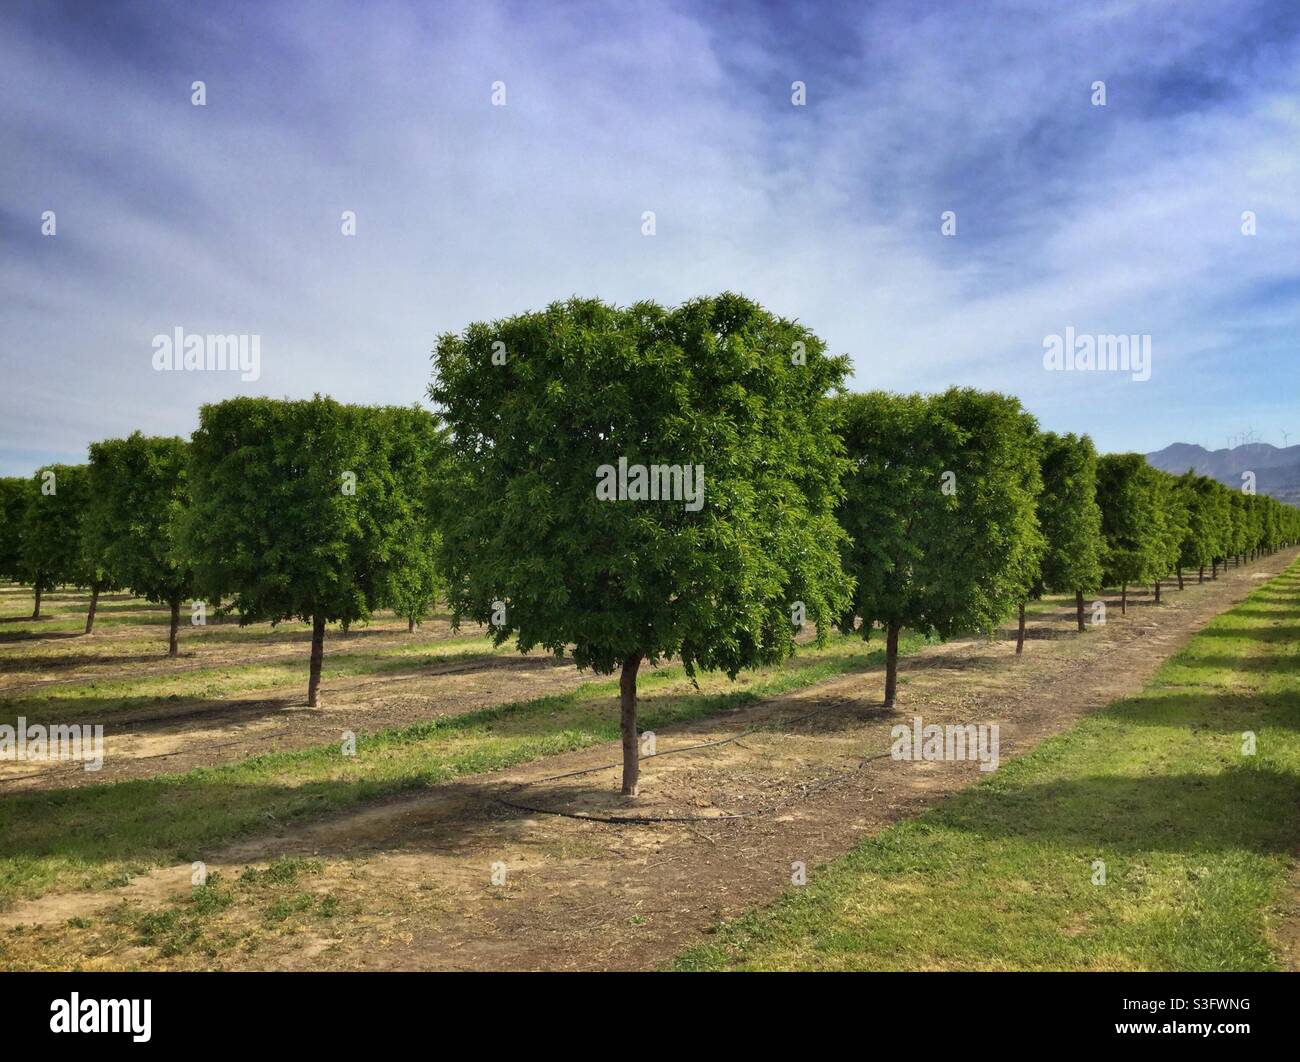 Pruned almond trees, Catalonia, Spain. Stock Photo